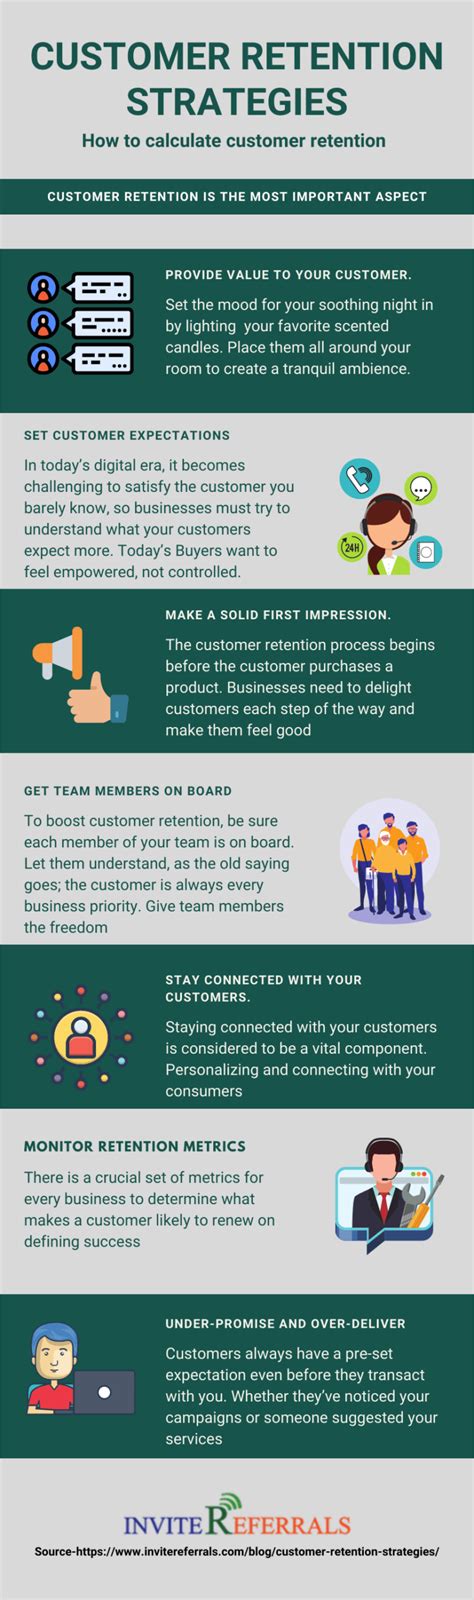 customer retention strategies infographic